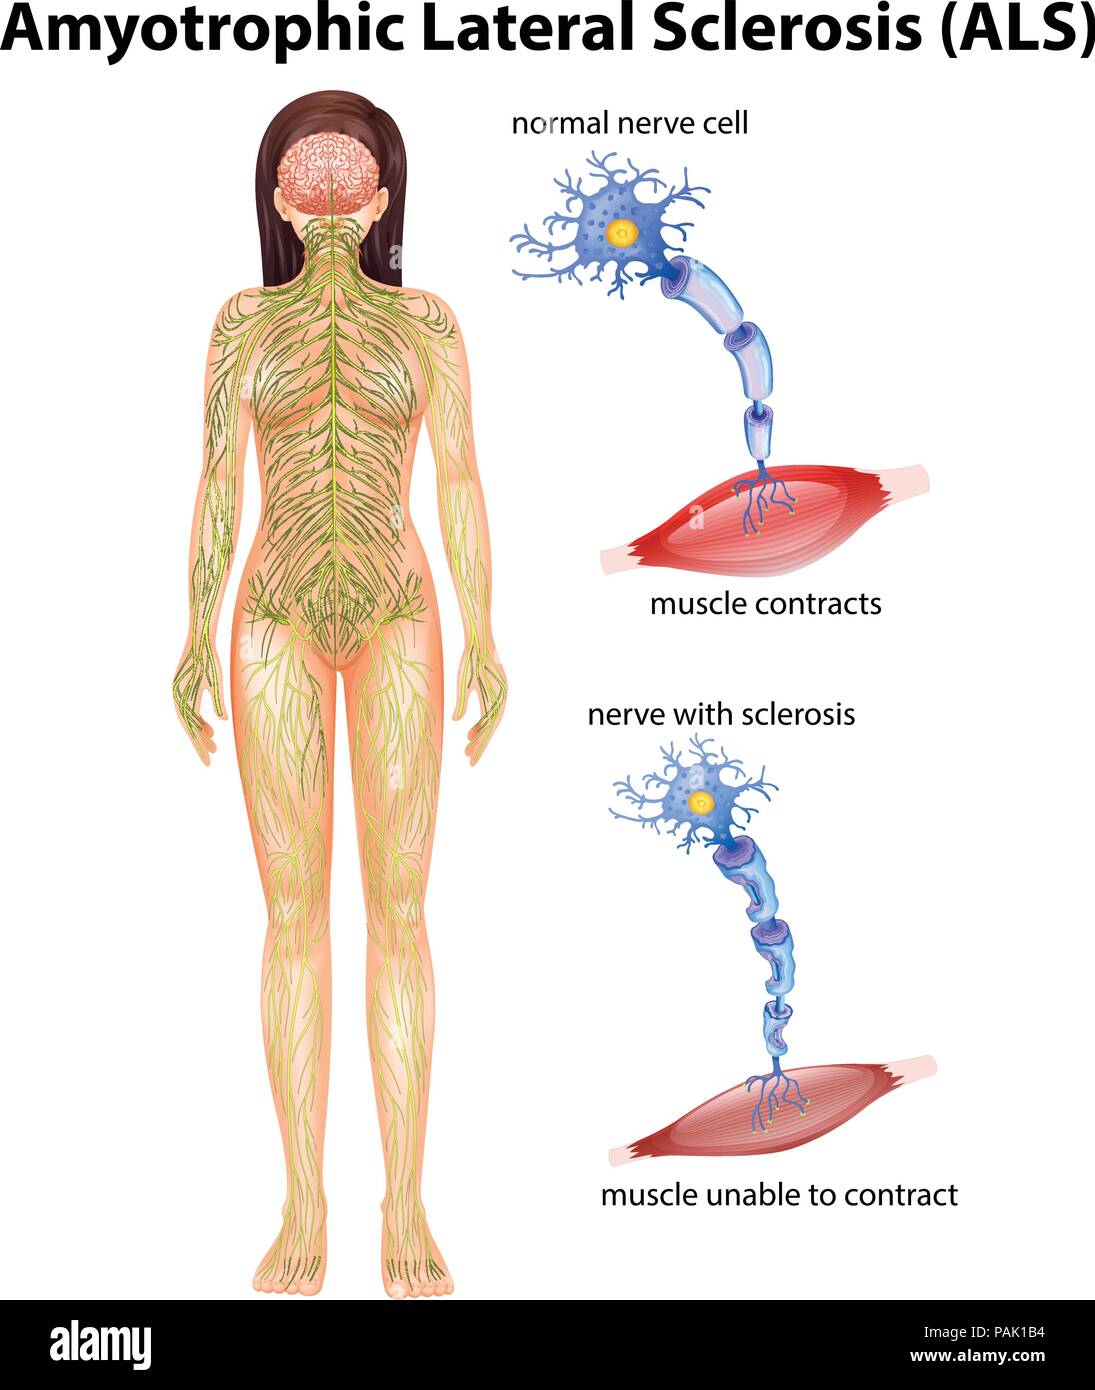 Hembra Ilustración De Esclerosis Lateral Amiotrófica Imagen Vector De Stock Alamy